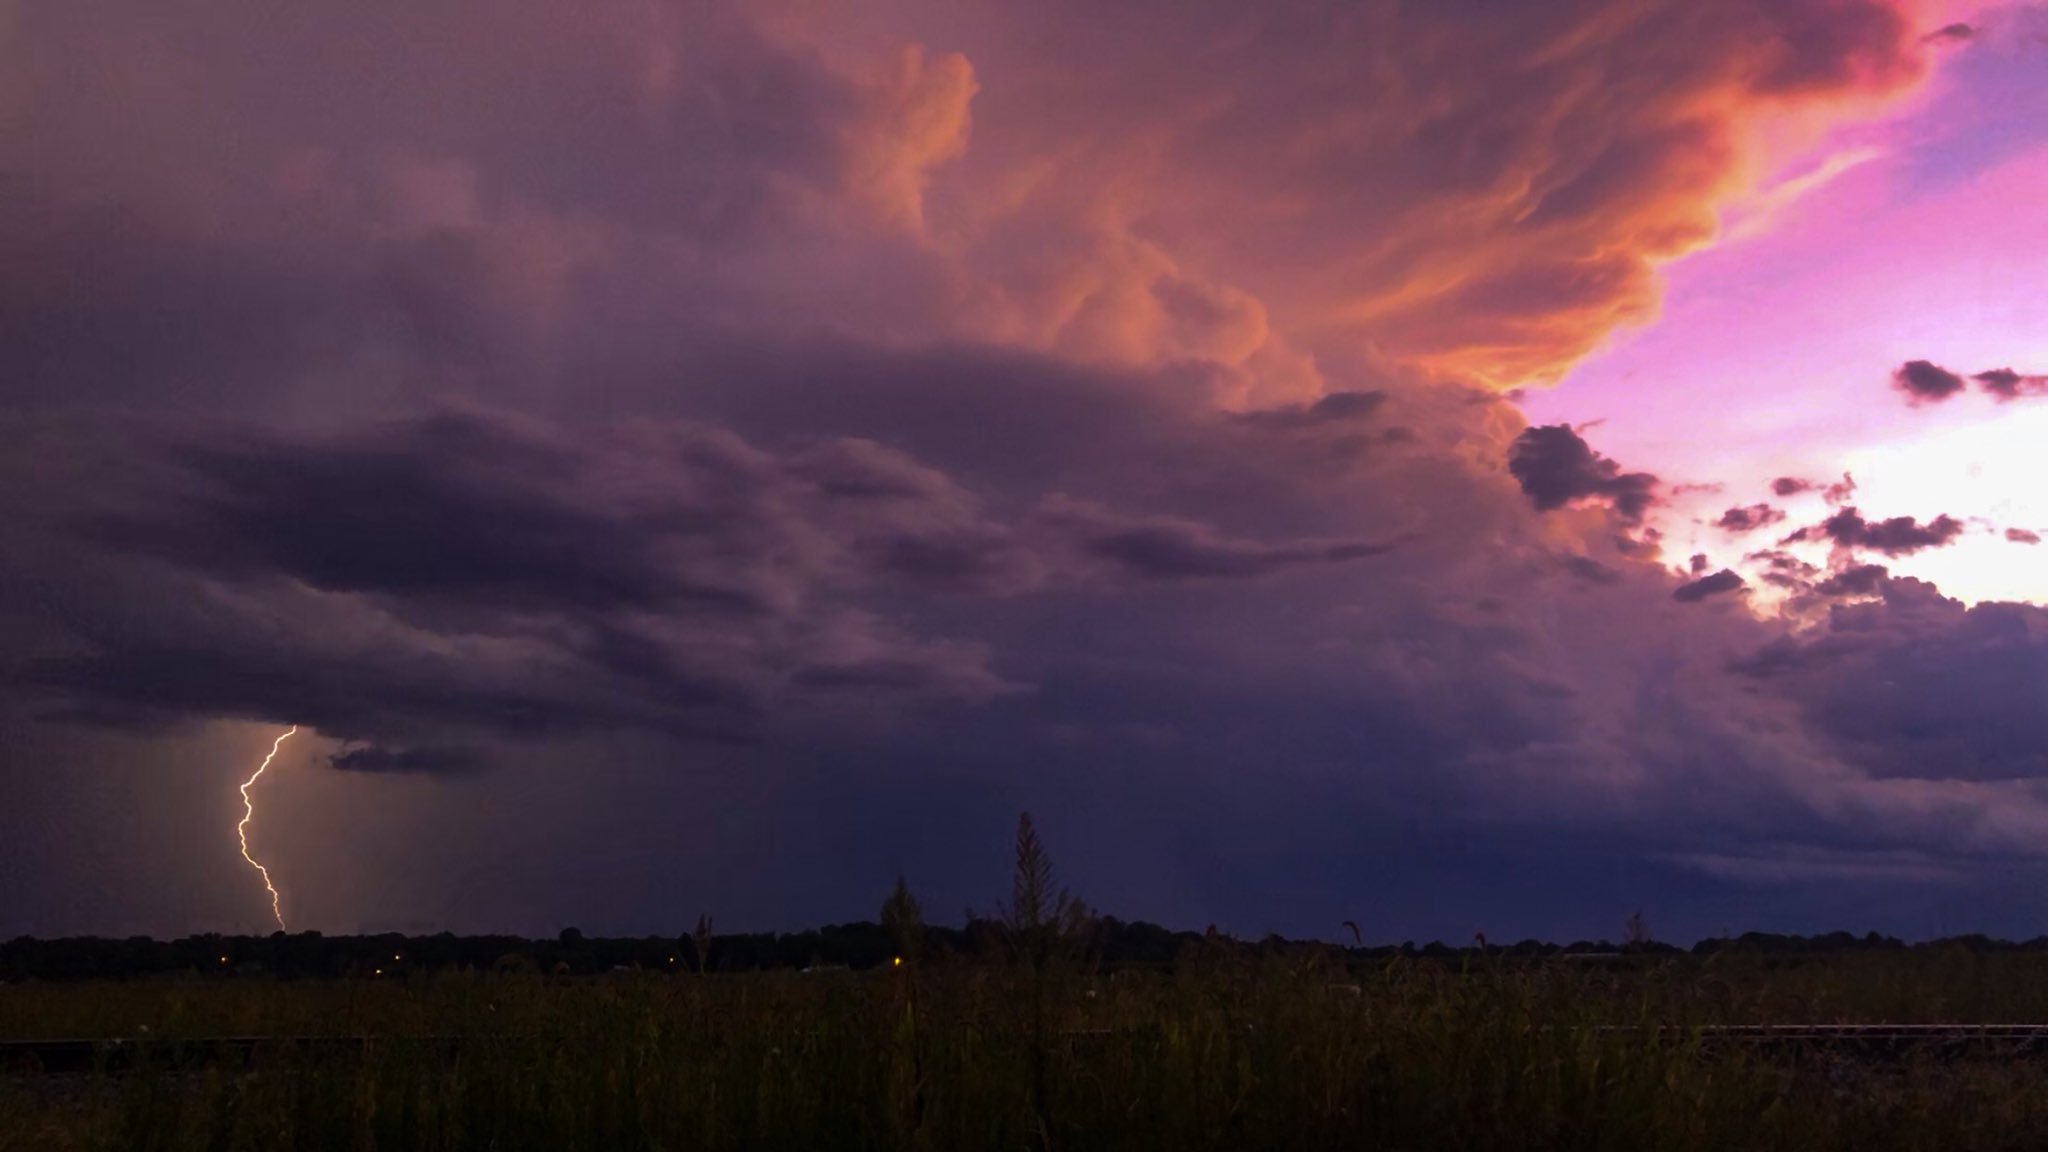 Intense lightning seen from Janesville, Iowa by Kari @kariredjay